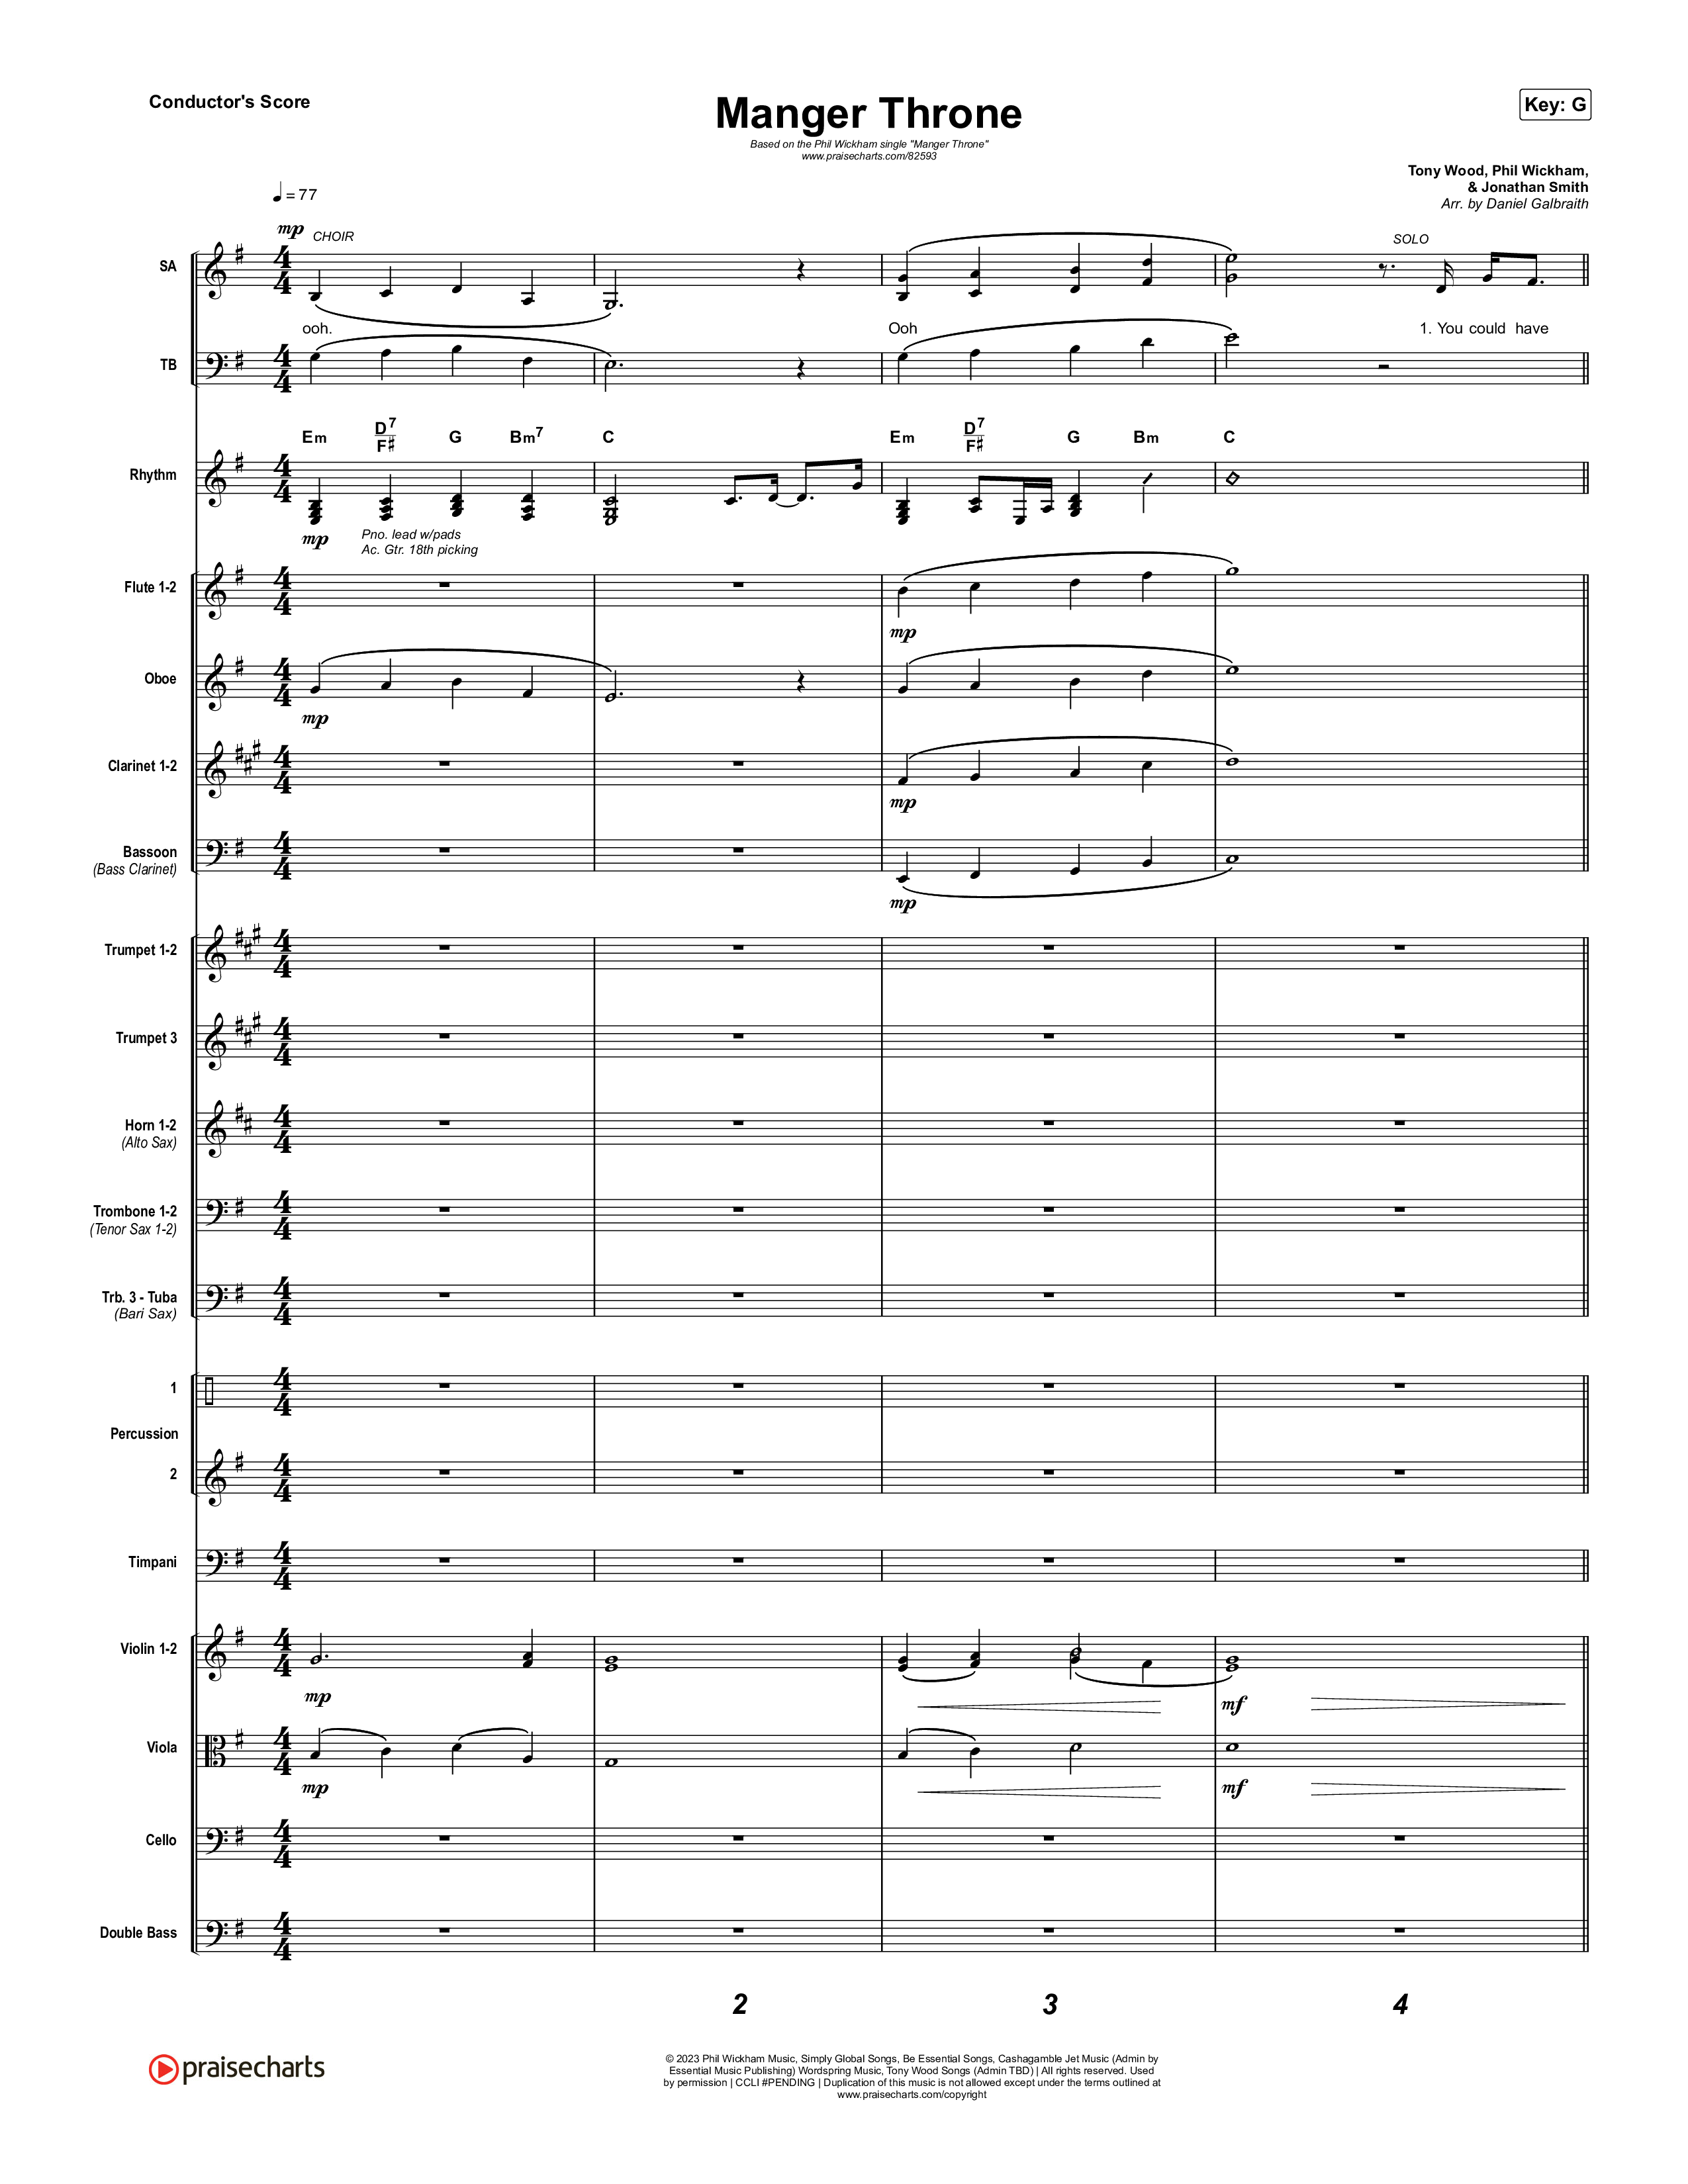 Manger Throne Orchestration (Phil Wickham)